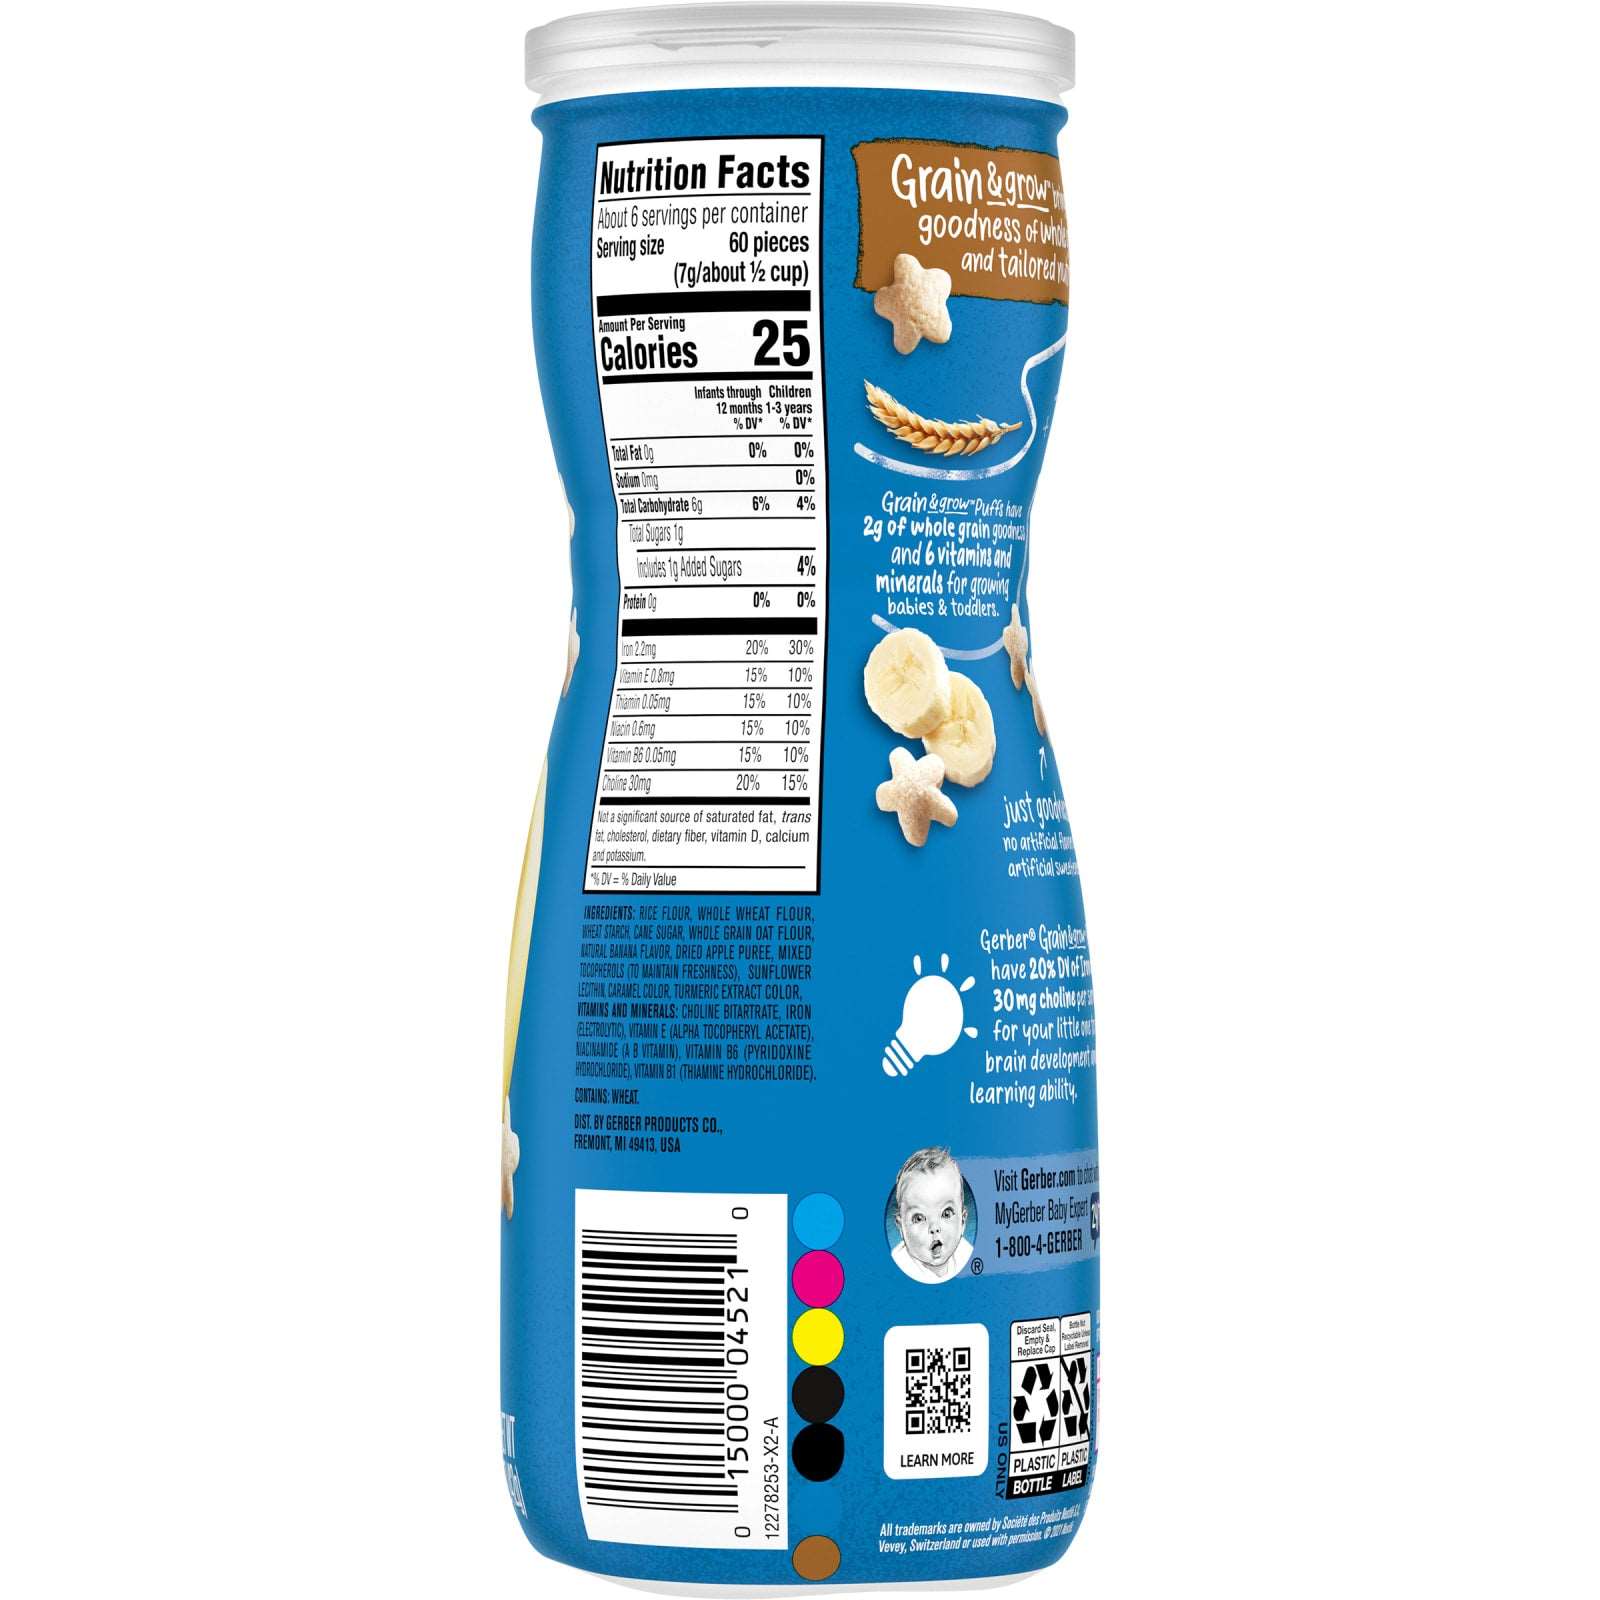 Gerber, Baby Cereal, 1st Foods, Rice, 8 oz (227 g)